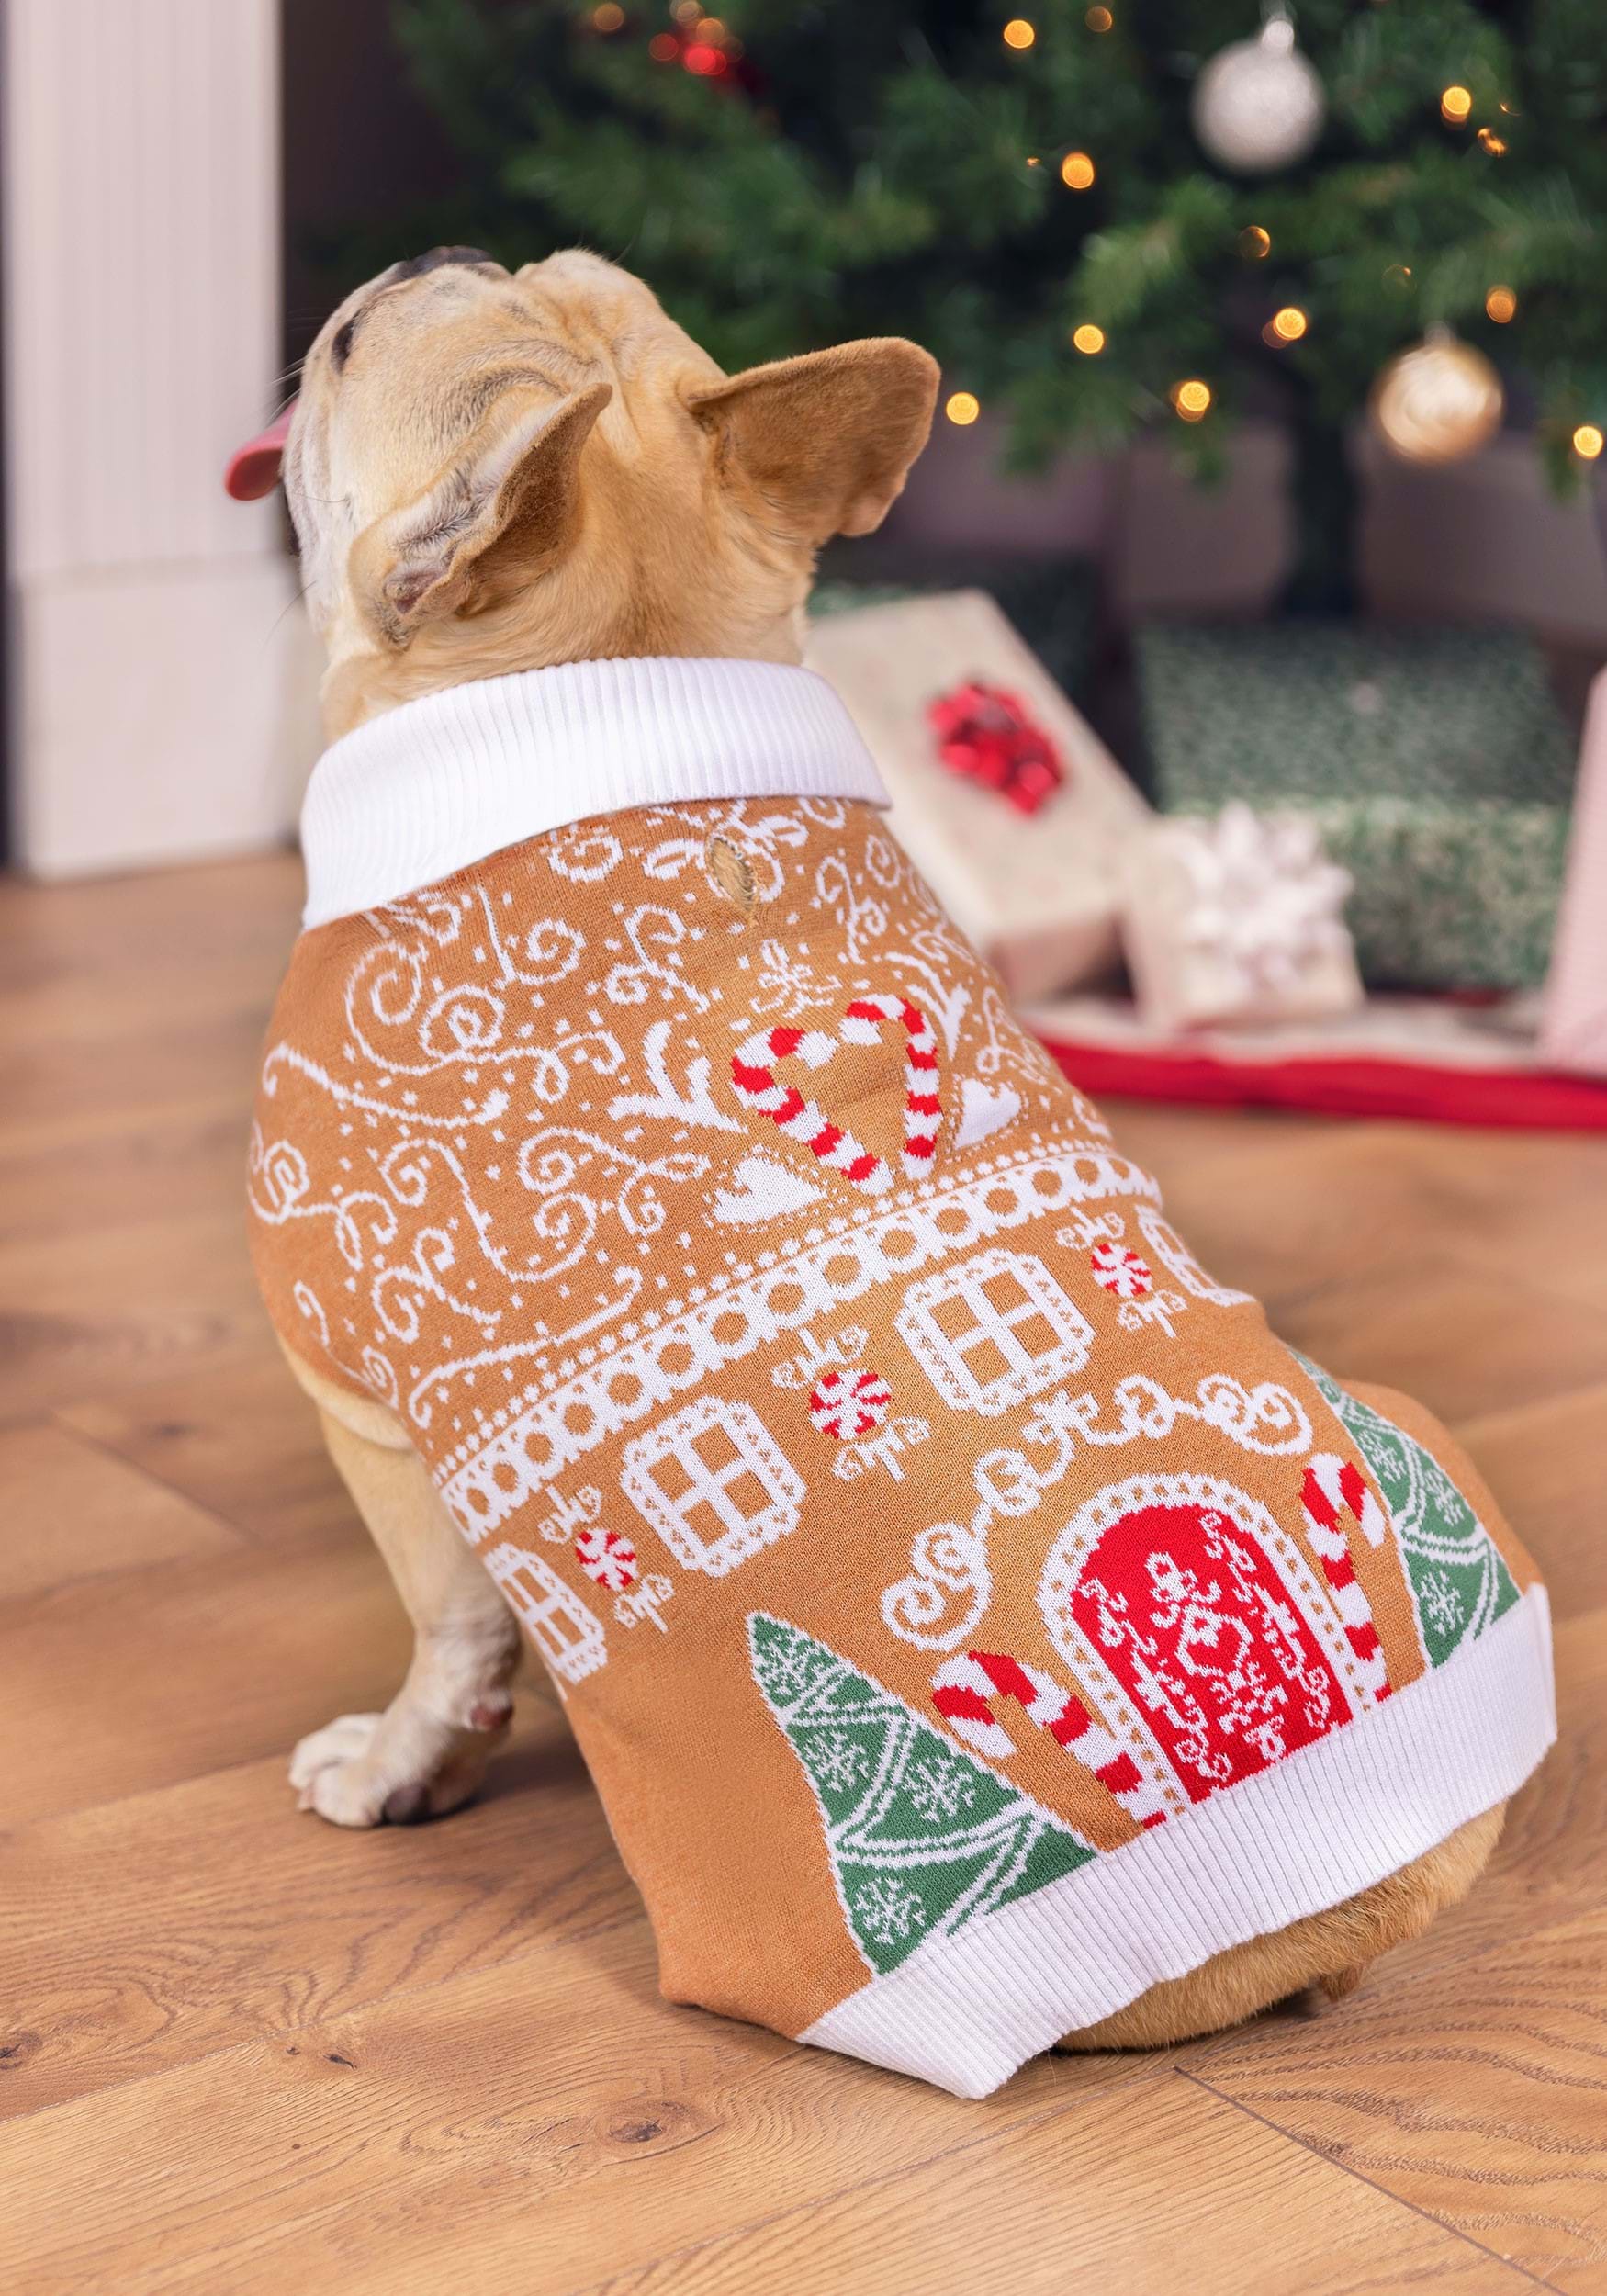  BINGPET Dog Sweater - Christmas Winter Warm Dog